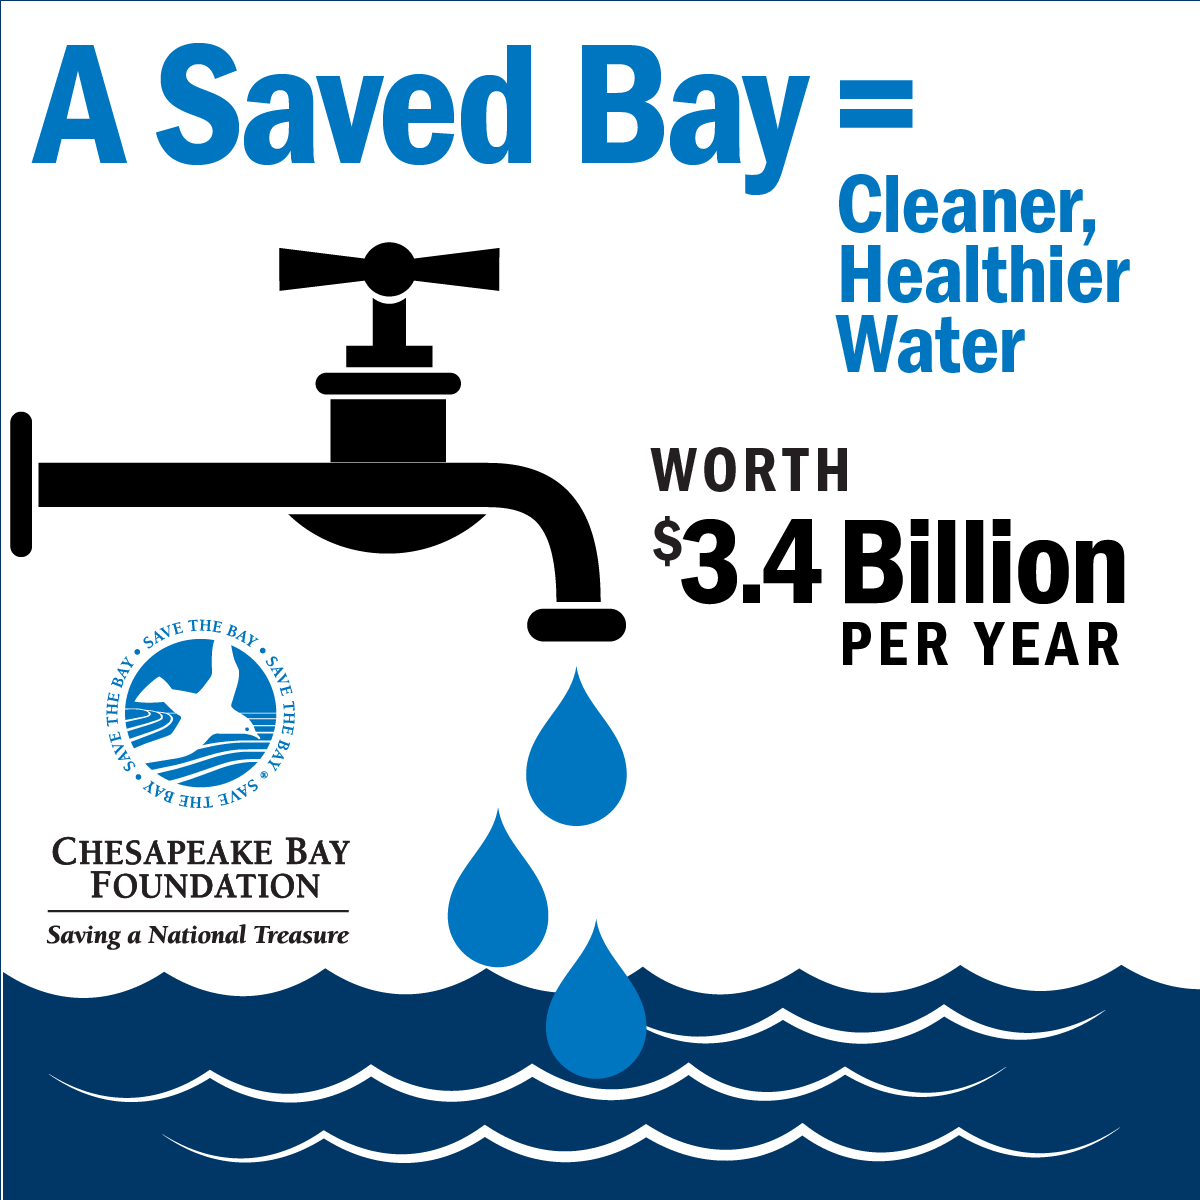 A Saved Bay = Cleaner, Healthier Water worth $3.4 Billion per year